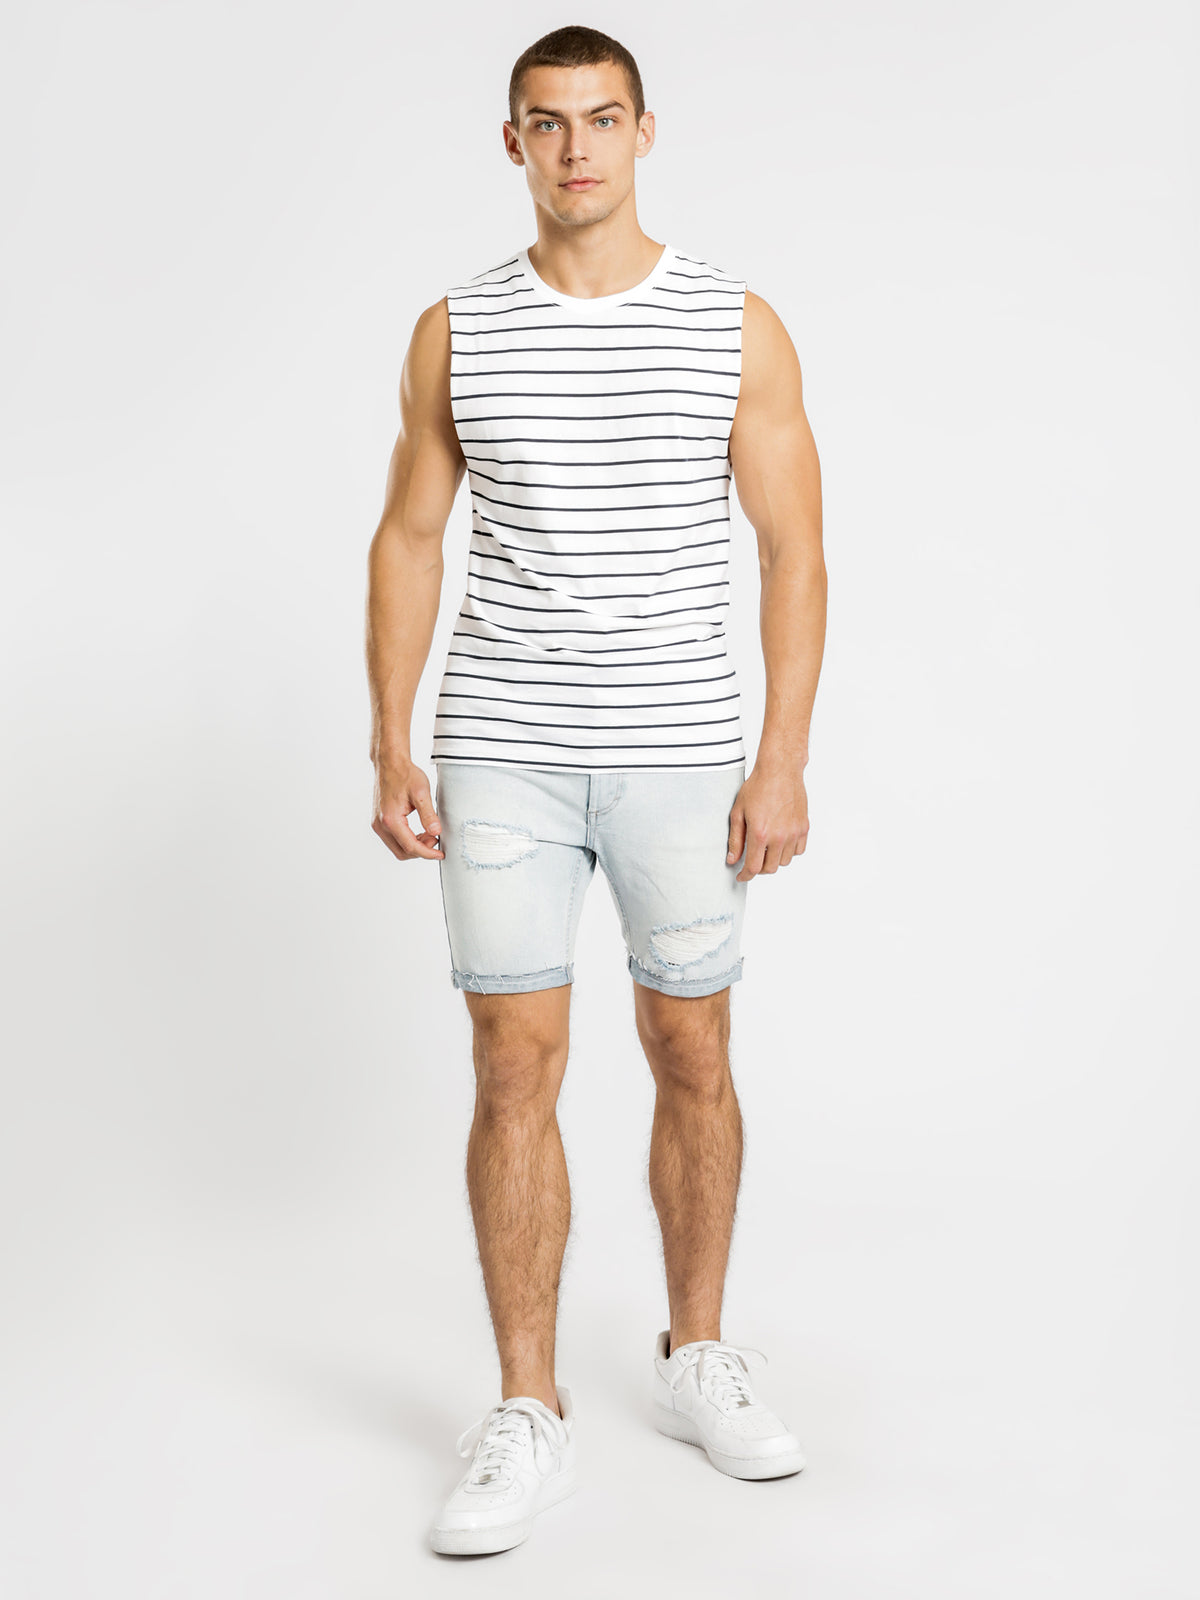 Casper Stripe Muscle T-Shirt in White Stripe